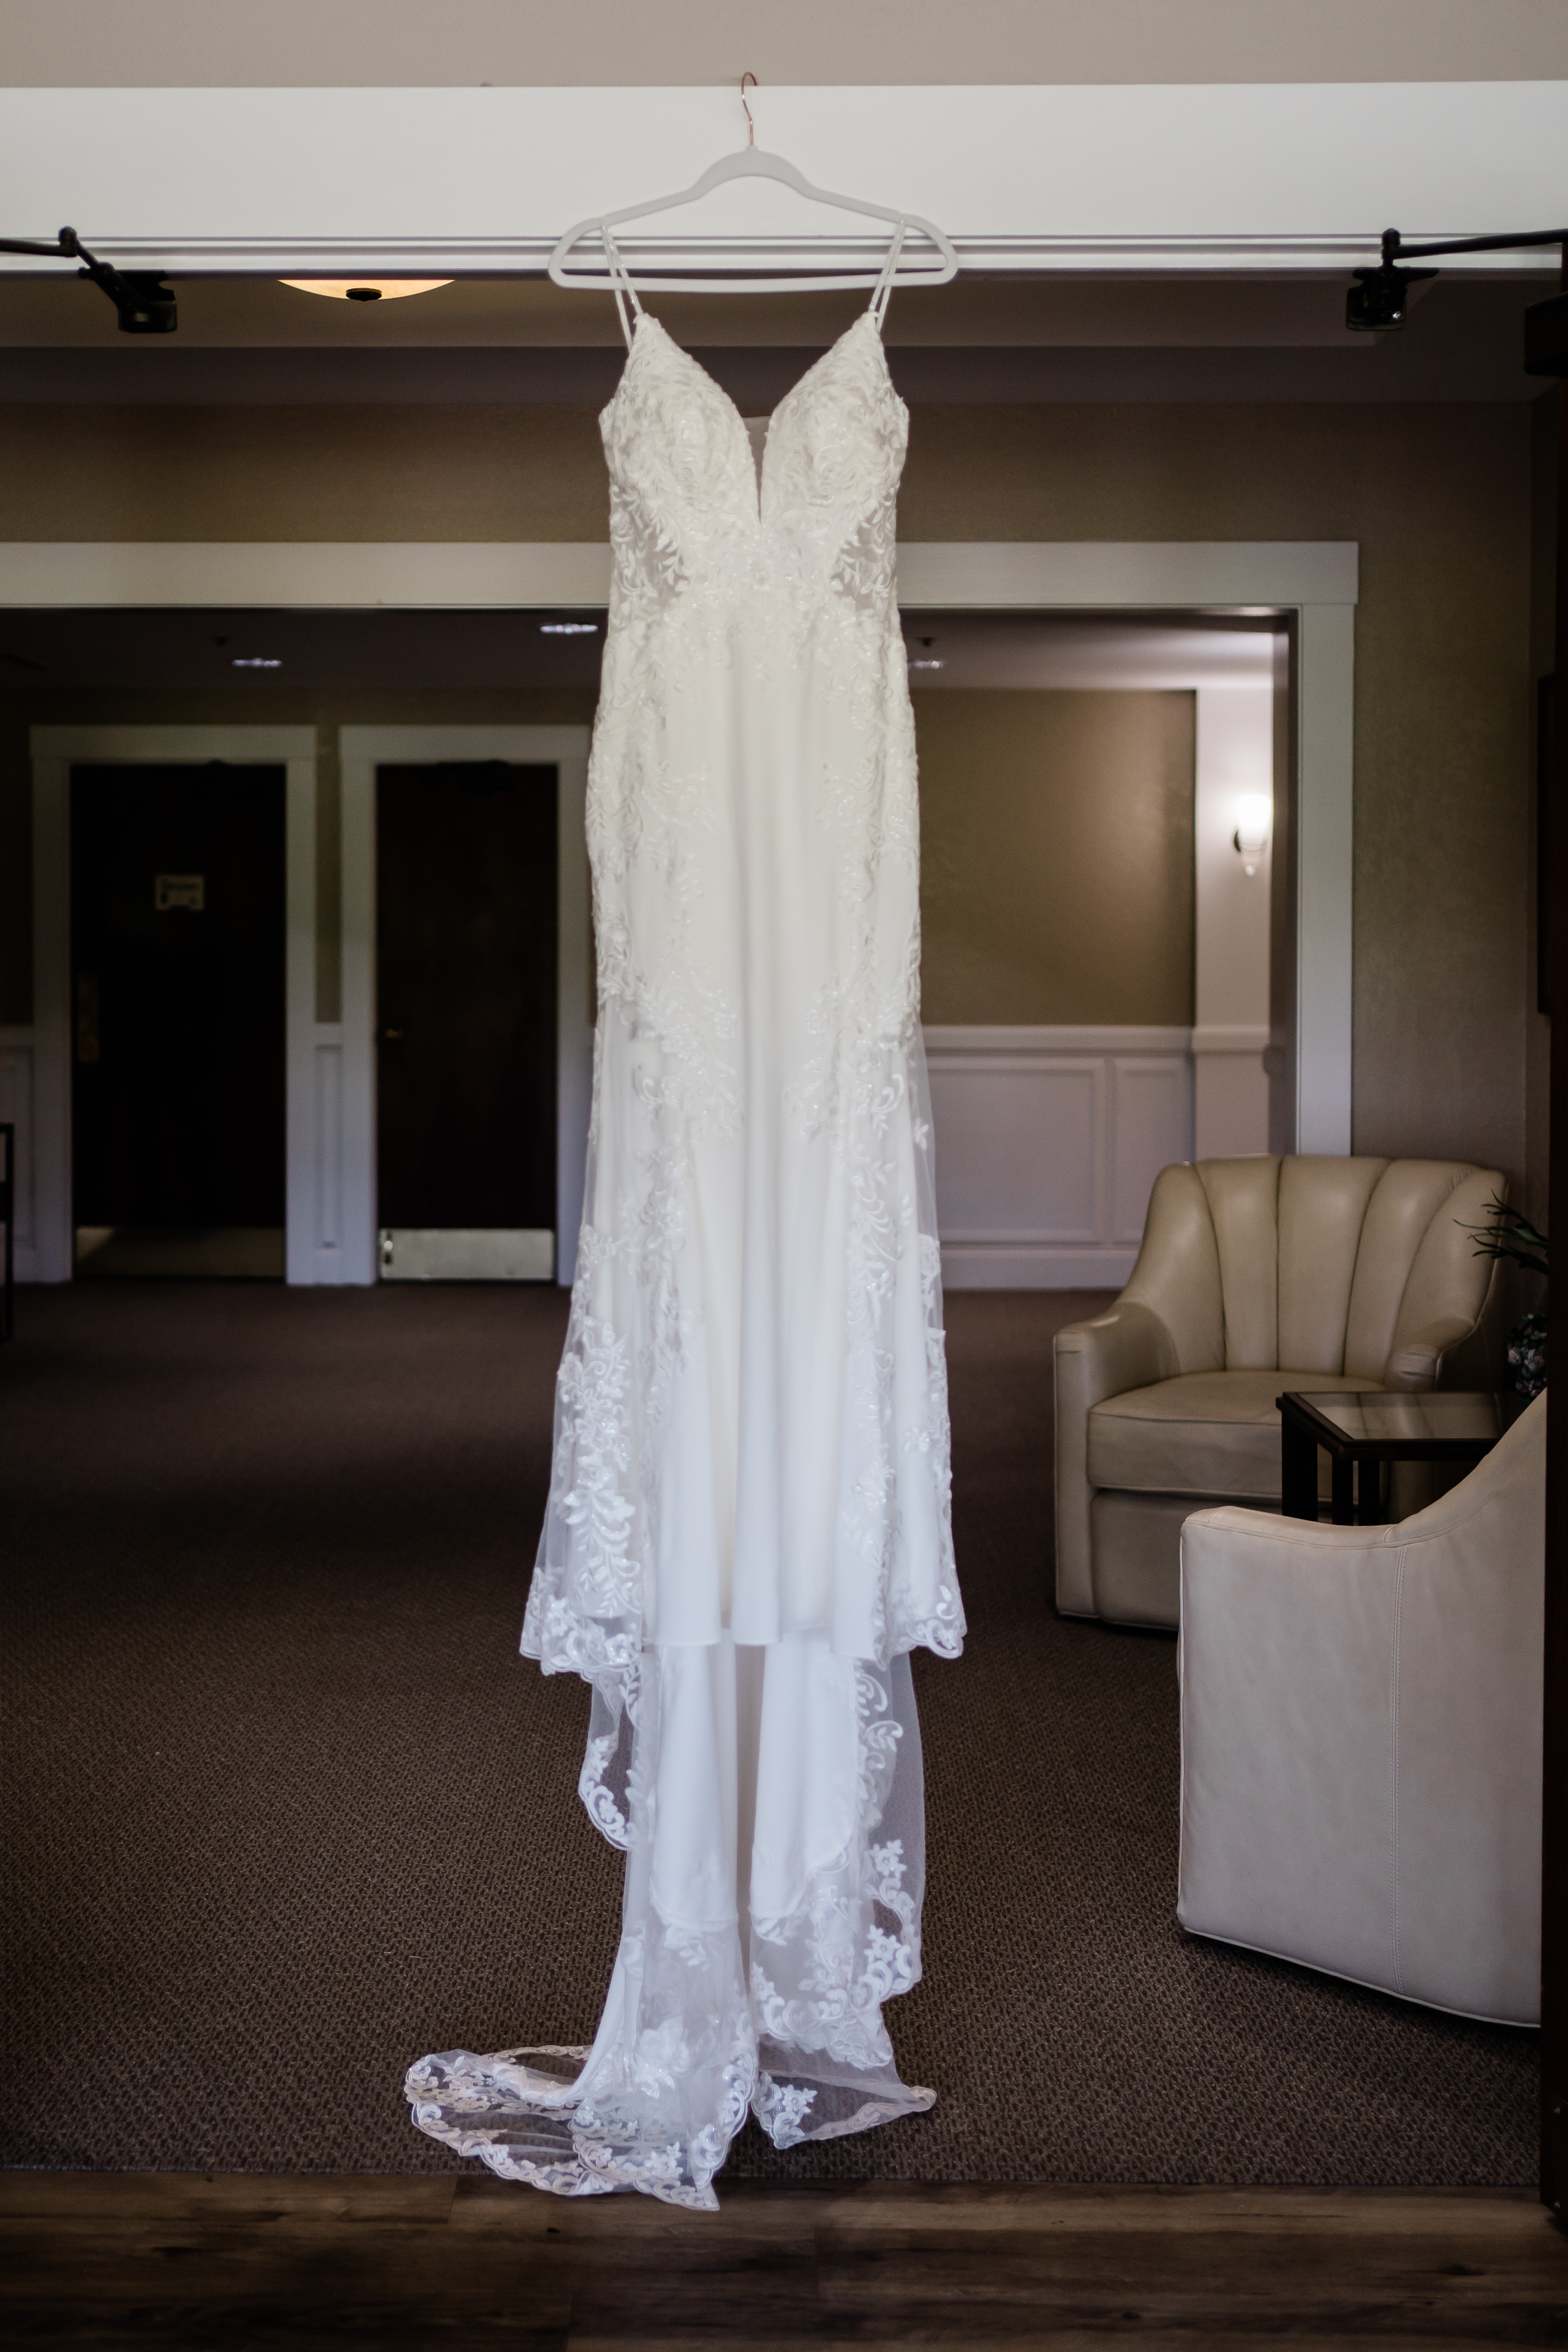 Fort Wayne wedding photographers capture wedding dress hanging before bride gets dressed